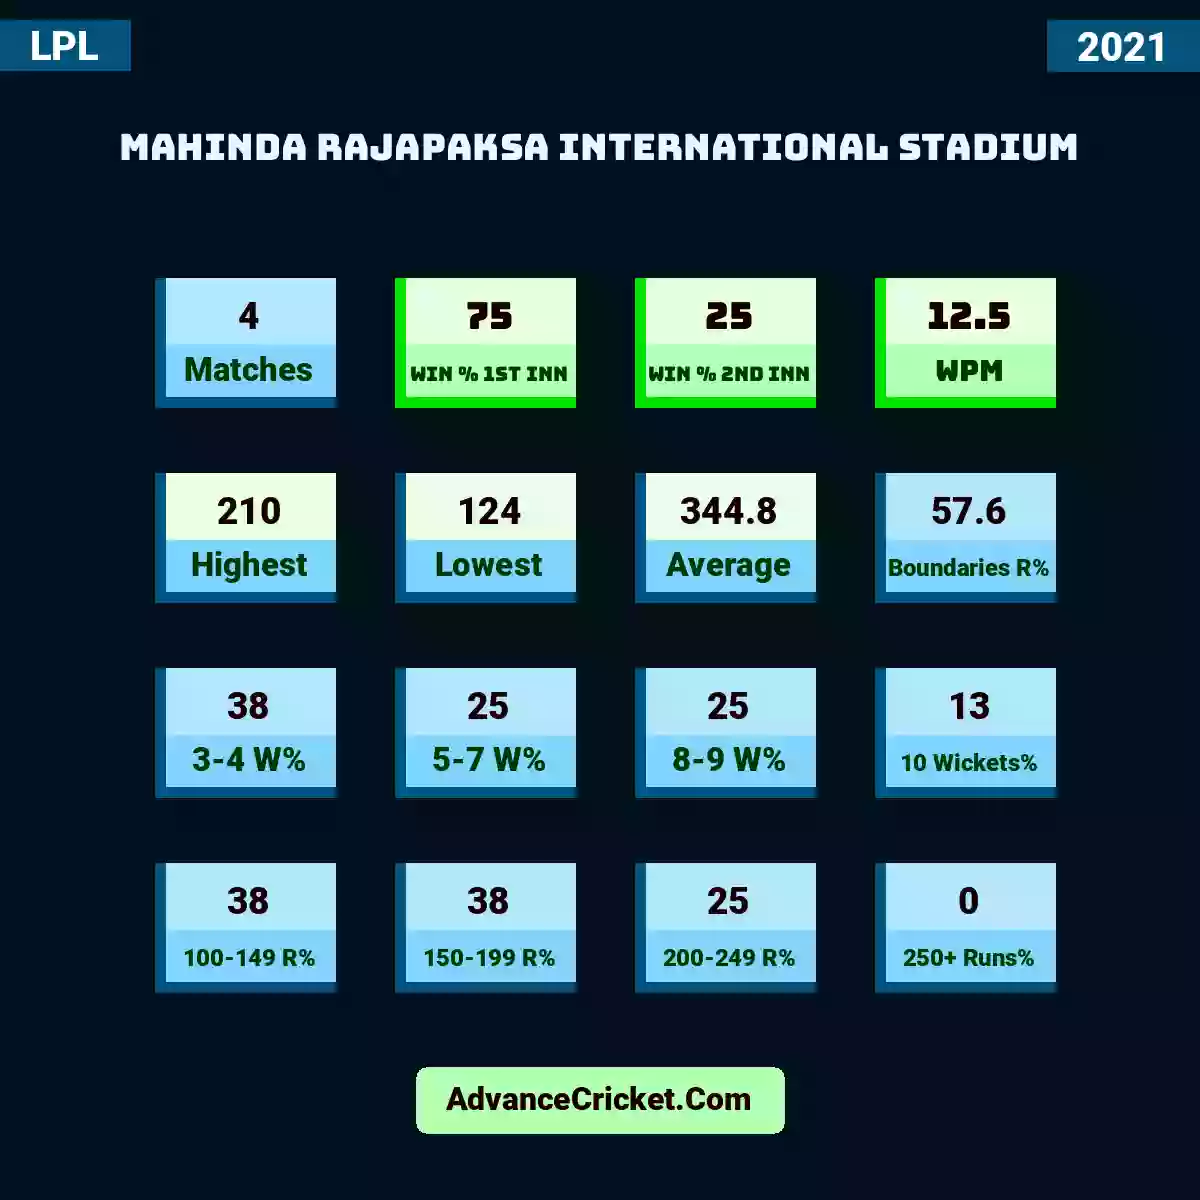 Image showing Mahinda Rajapaksa International Stadium with Matches: 4, Win % 1st Inn: 75, Win % 2nd Inn: 25, WPM: 12.5, Highest: 210, Lowest: 124, Average: 344.8, Boundaries R%: 57.6, 3-4 W%: 38, 5-7 W%: 25, 8-9 W%: 25, 10 Wickets%: 13, 100-149 R%: 38, 150-199 R%: 38, 200-249 R%: 25, 250+ Runs%: 0.